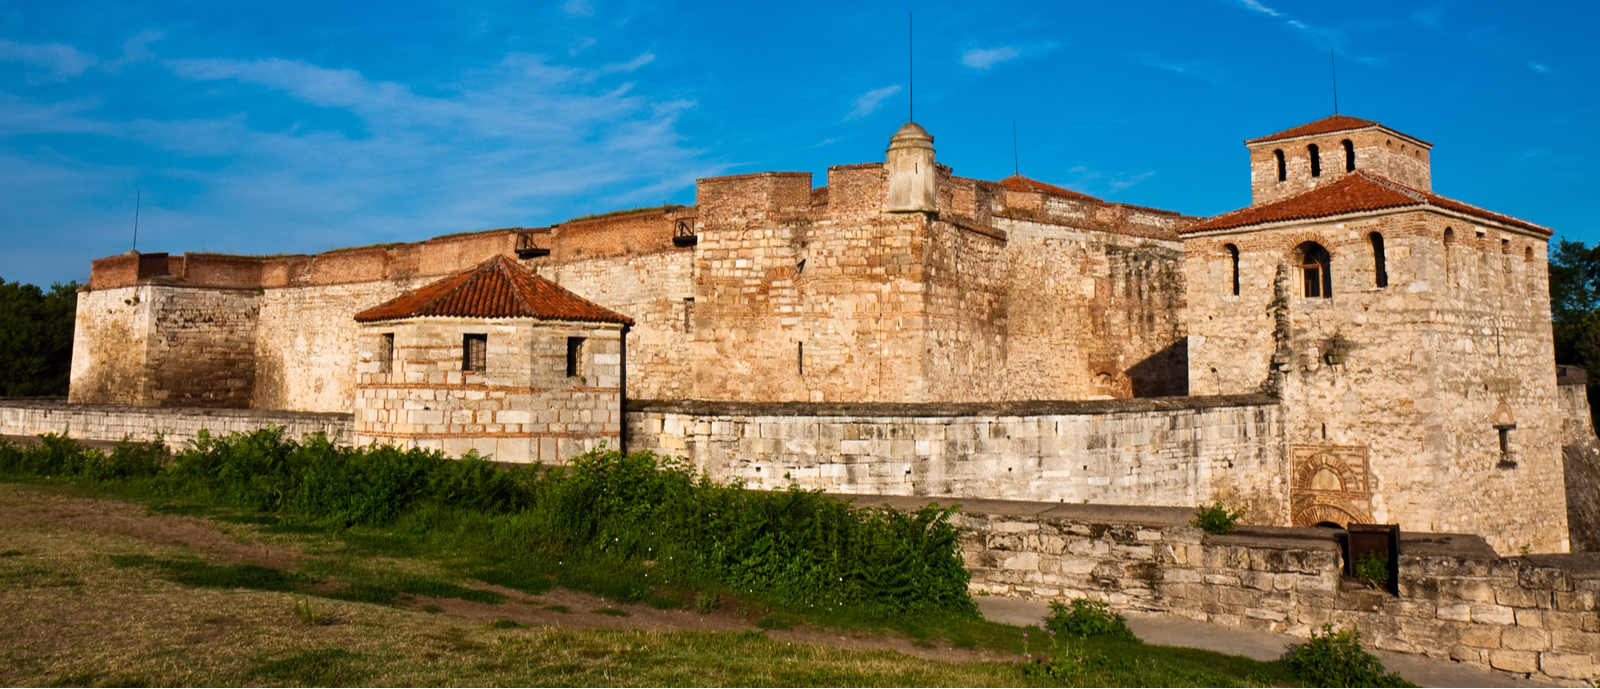 baba vida fortress bulgaria